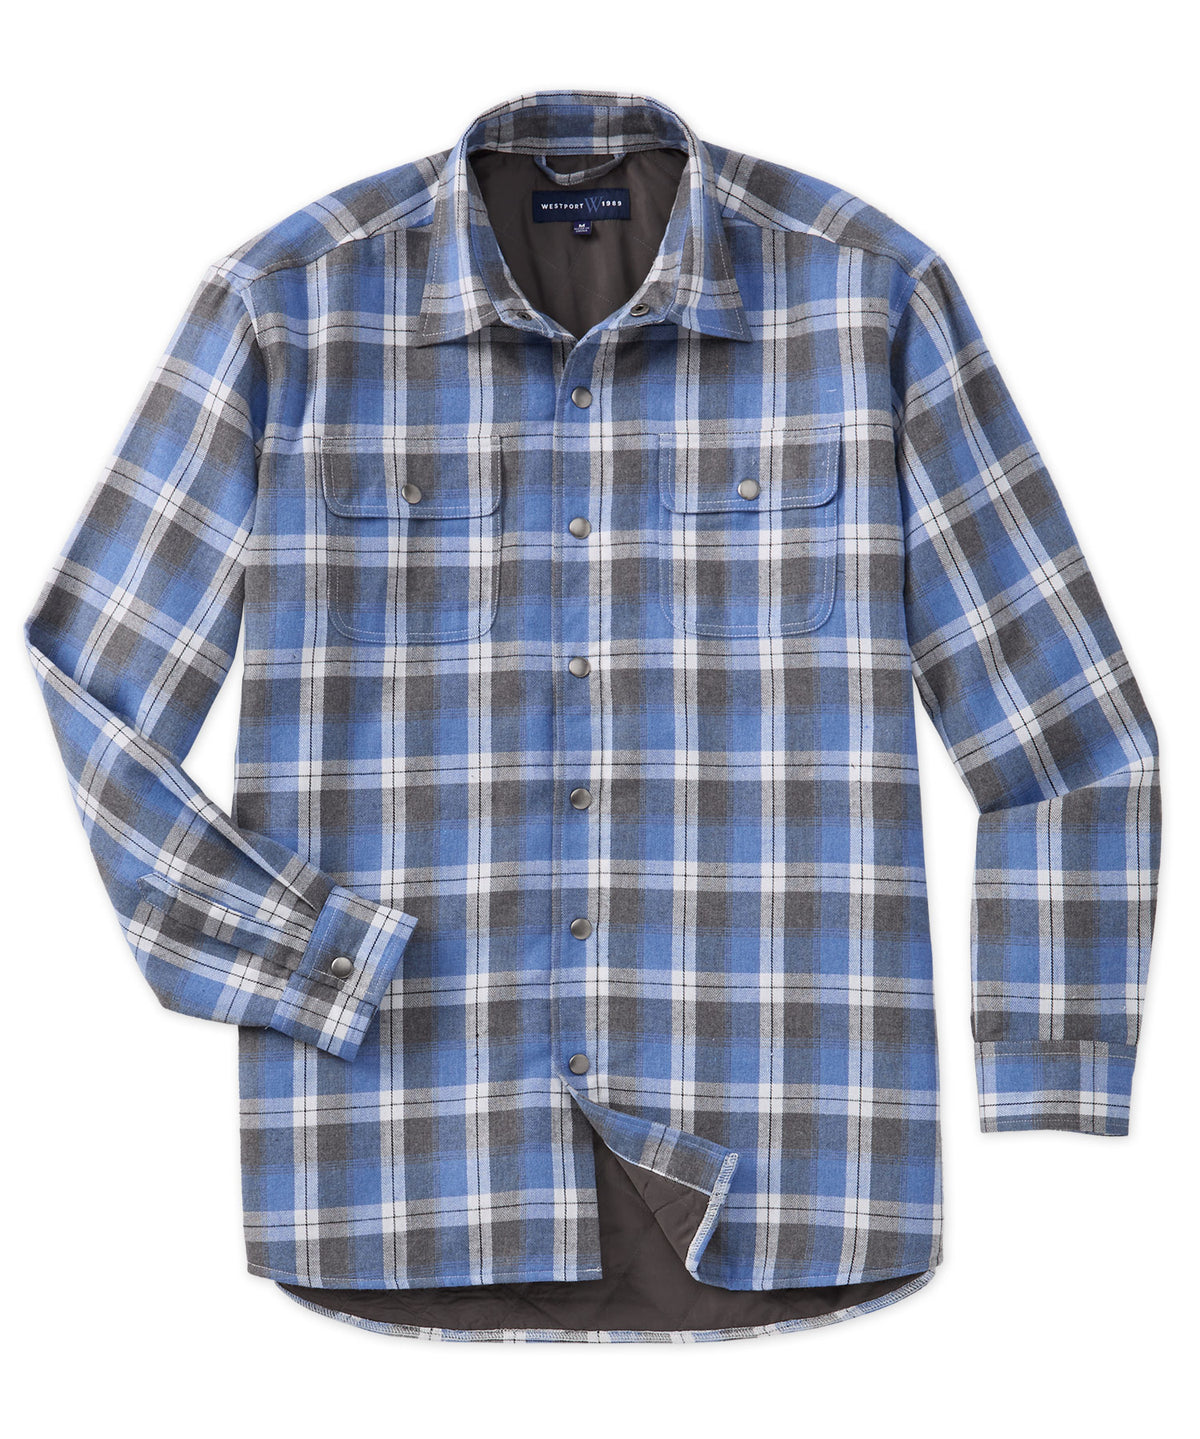 Westport Lifestyle Firepit Flannel Plaid Shirt Jacket